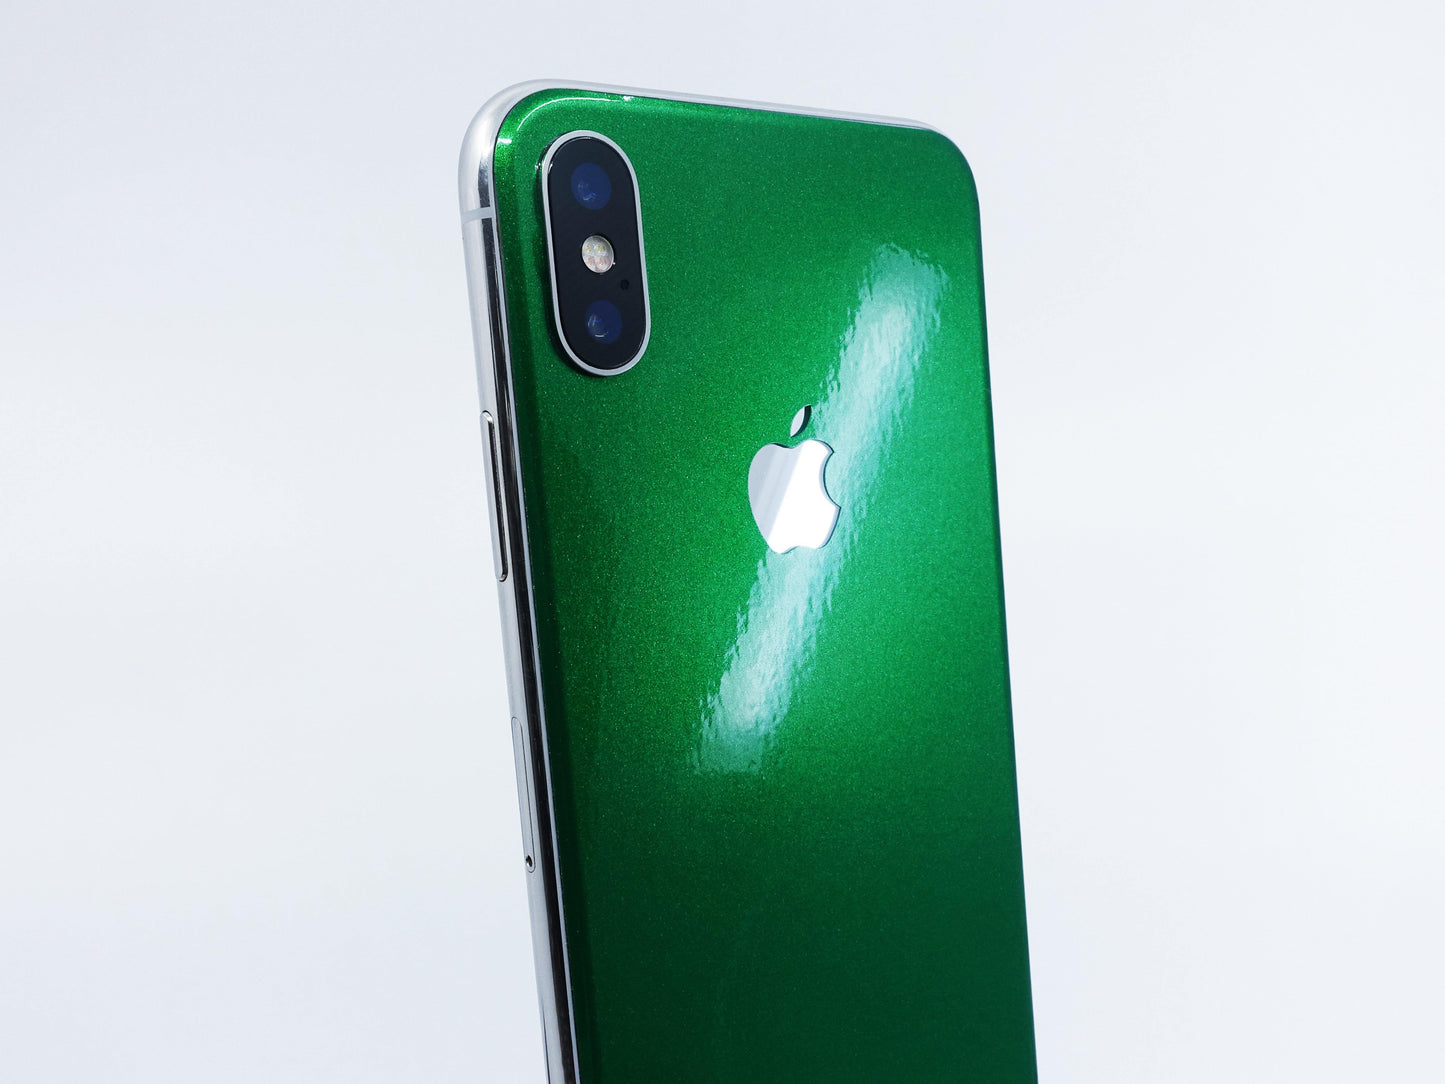 Apple Green - make it stick